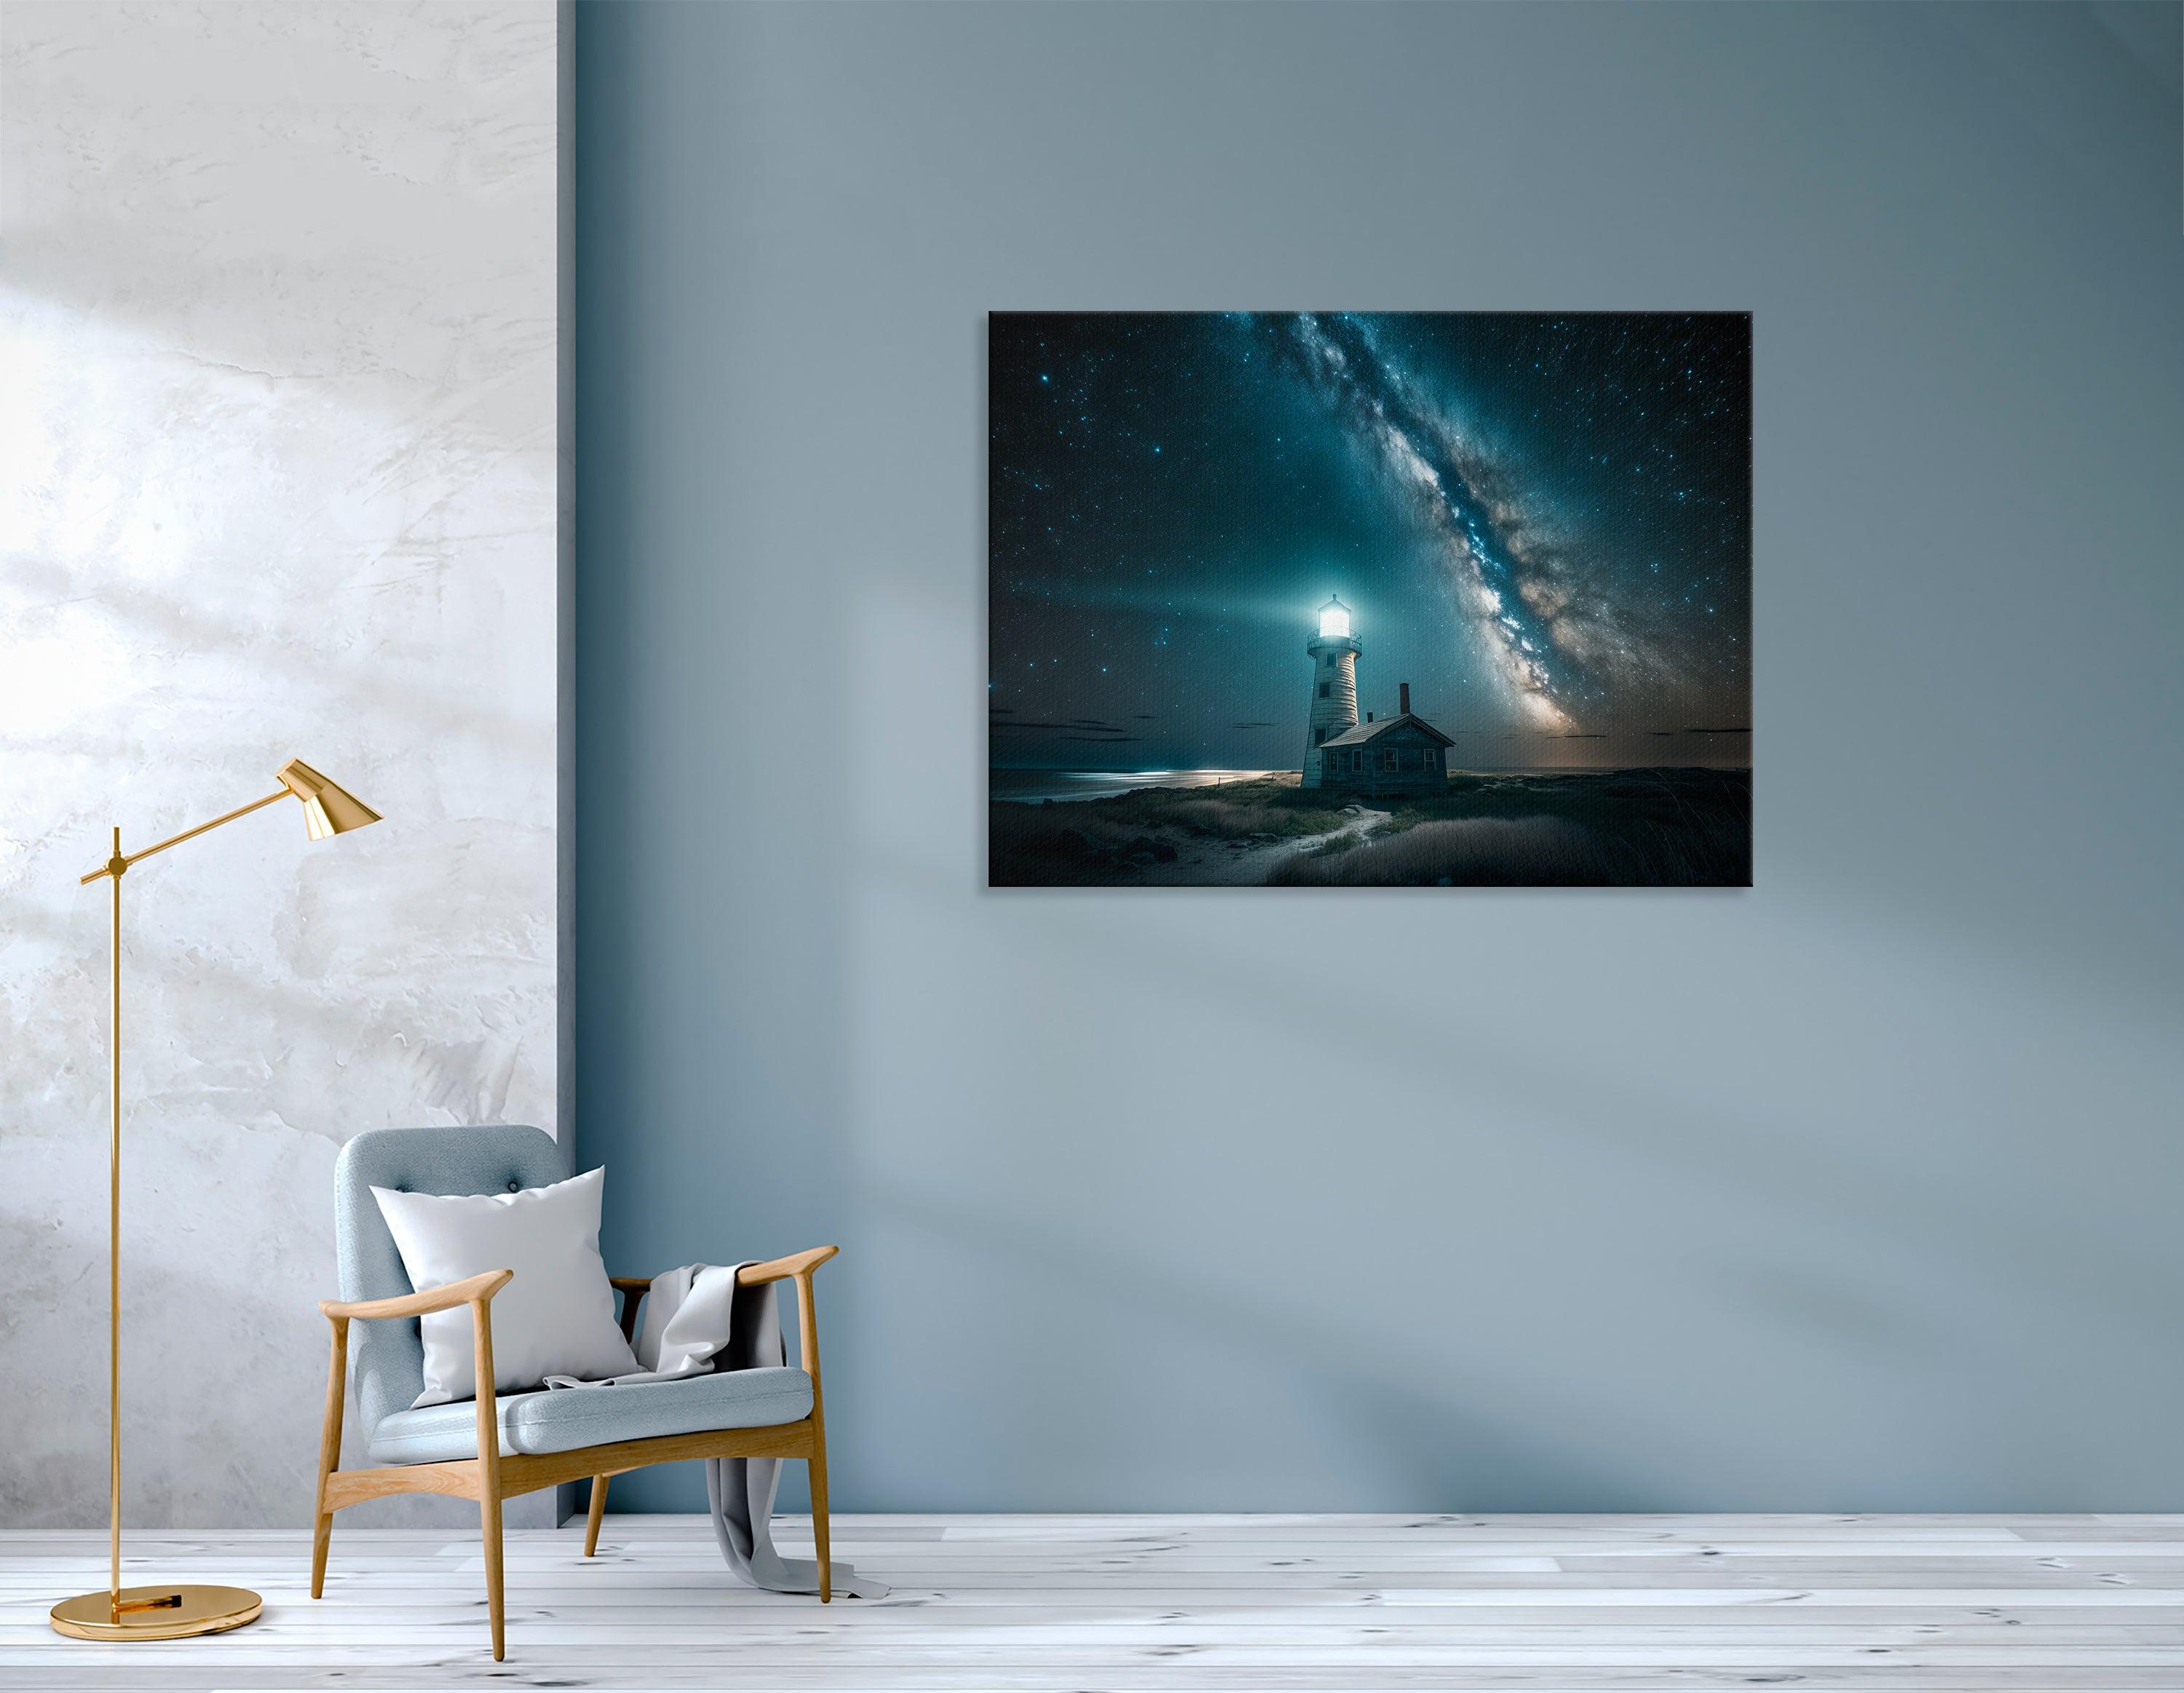 Lighthouse on the Coast under the Starry Sky - Canvas Print - Artoholica Ready to Hang Canvas Print